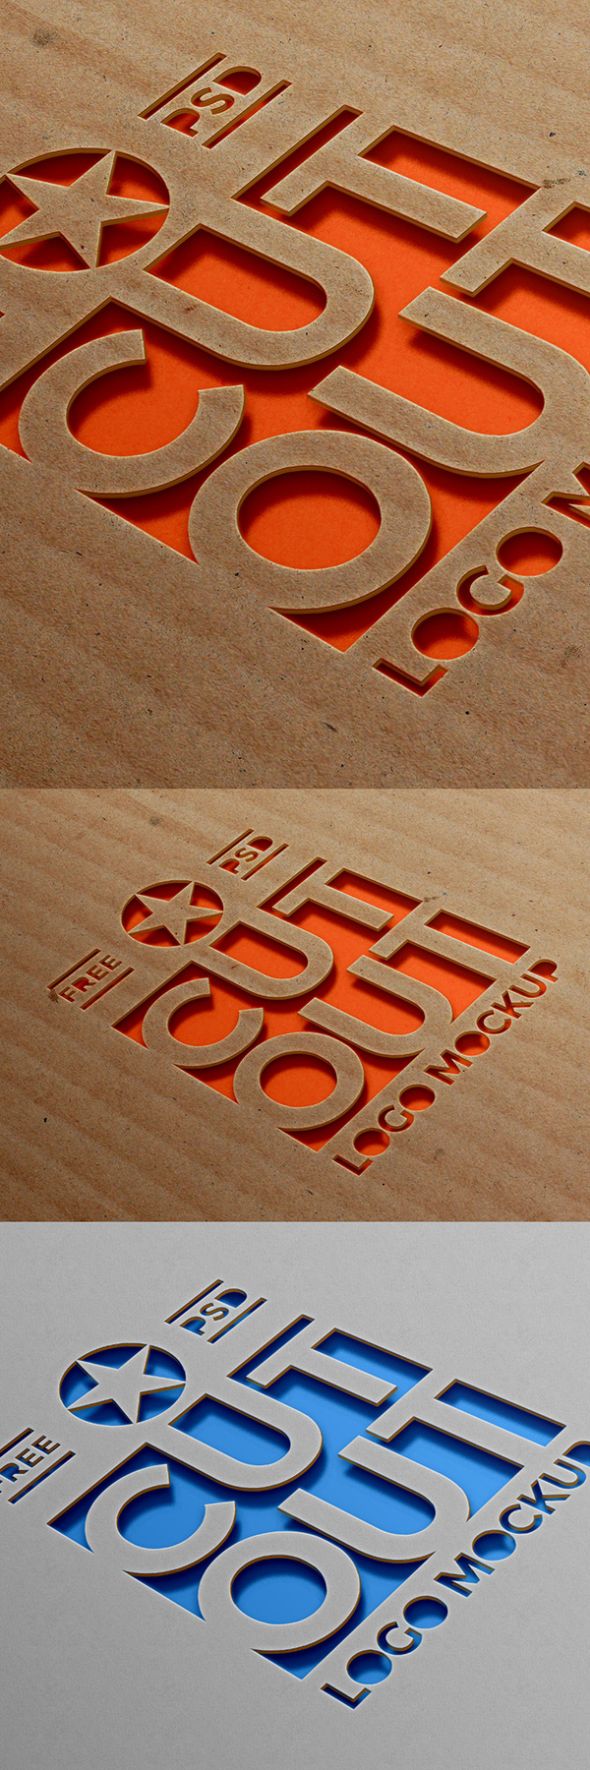 cardboard-cutout-logo-mockup-graphicfuel